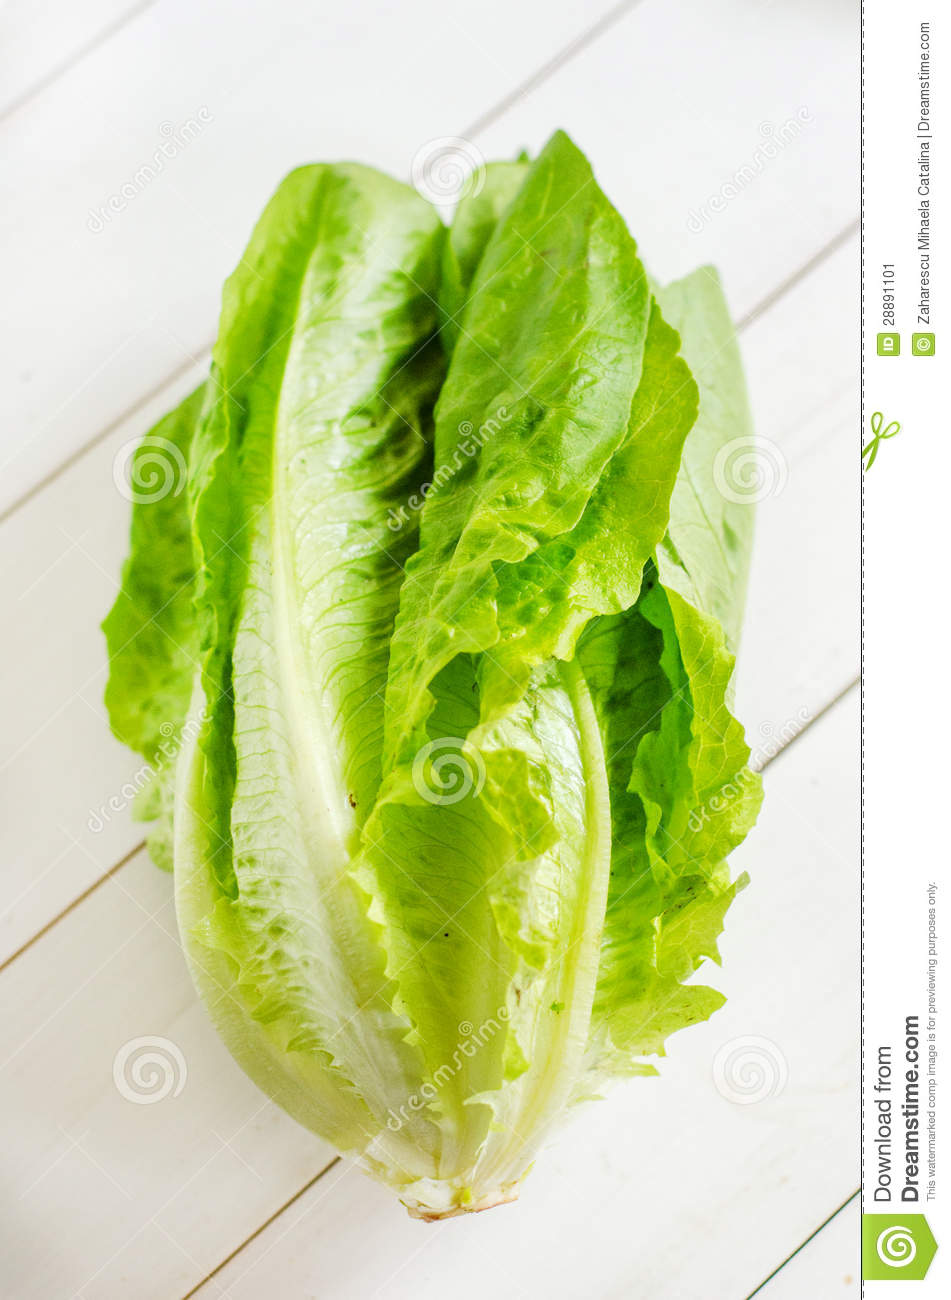 Romaine Lettuce Stock Image   Image  28891101